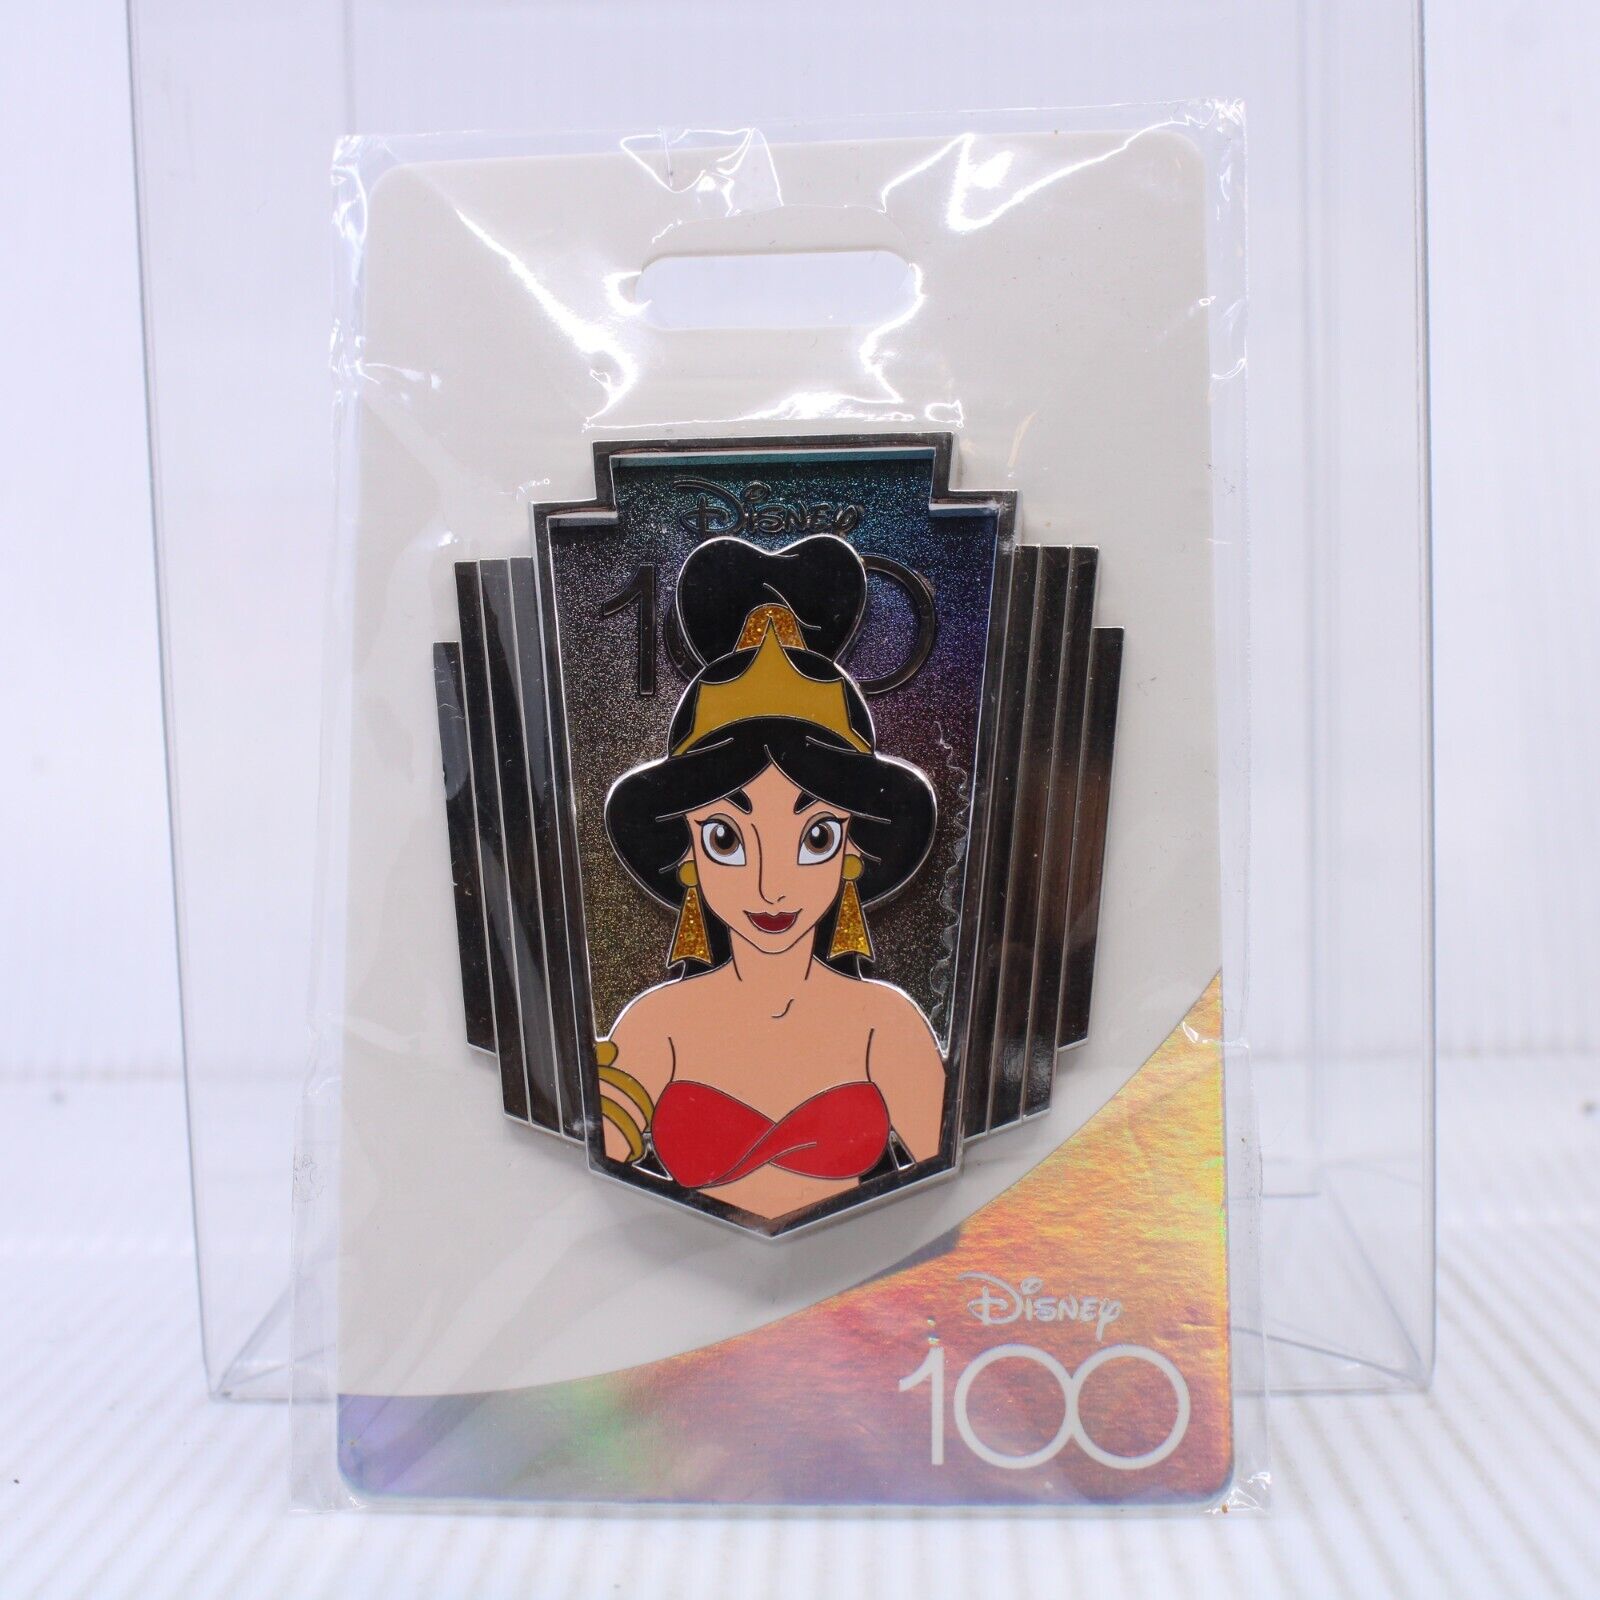 A5 Disney WDI Imagineering LE 300 Pin 100 Years Jasmine Aladdin Princess